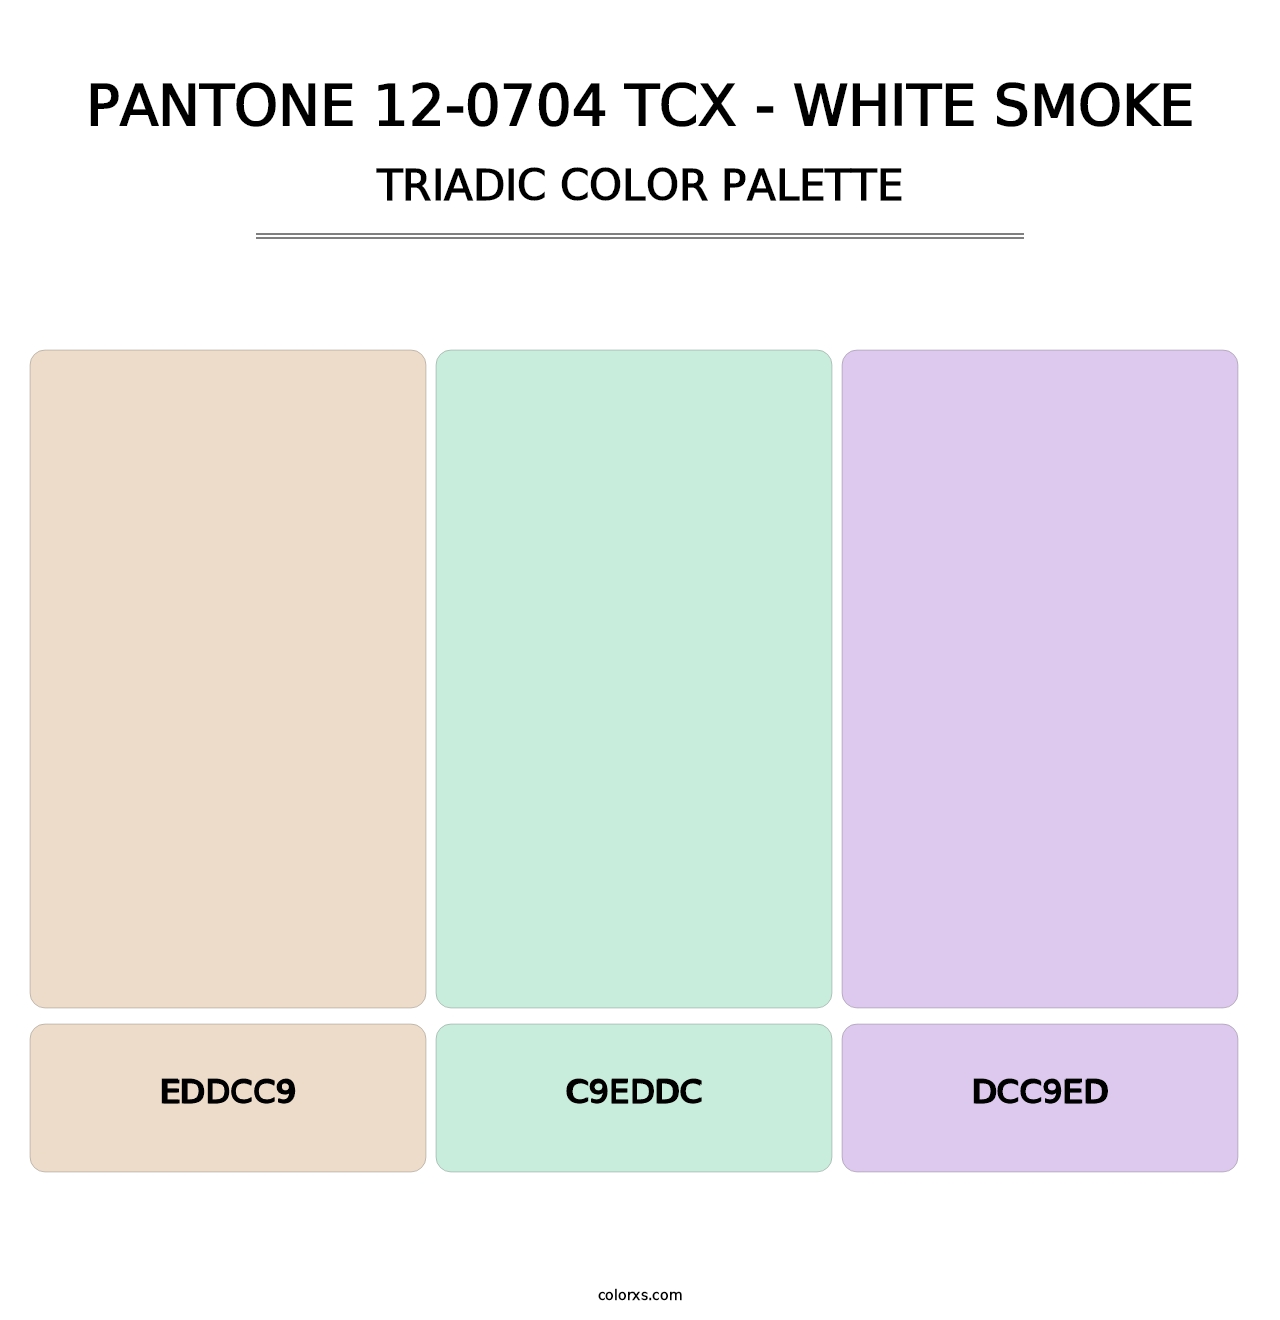 PANTONE 12-0704 TCX - White Smoke - Triadic Color Palette